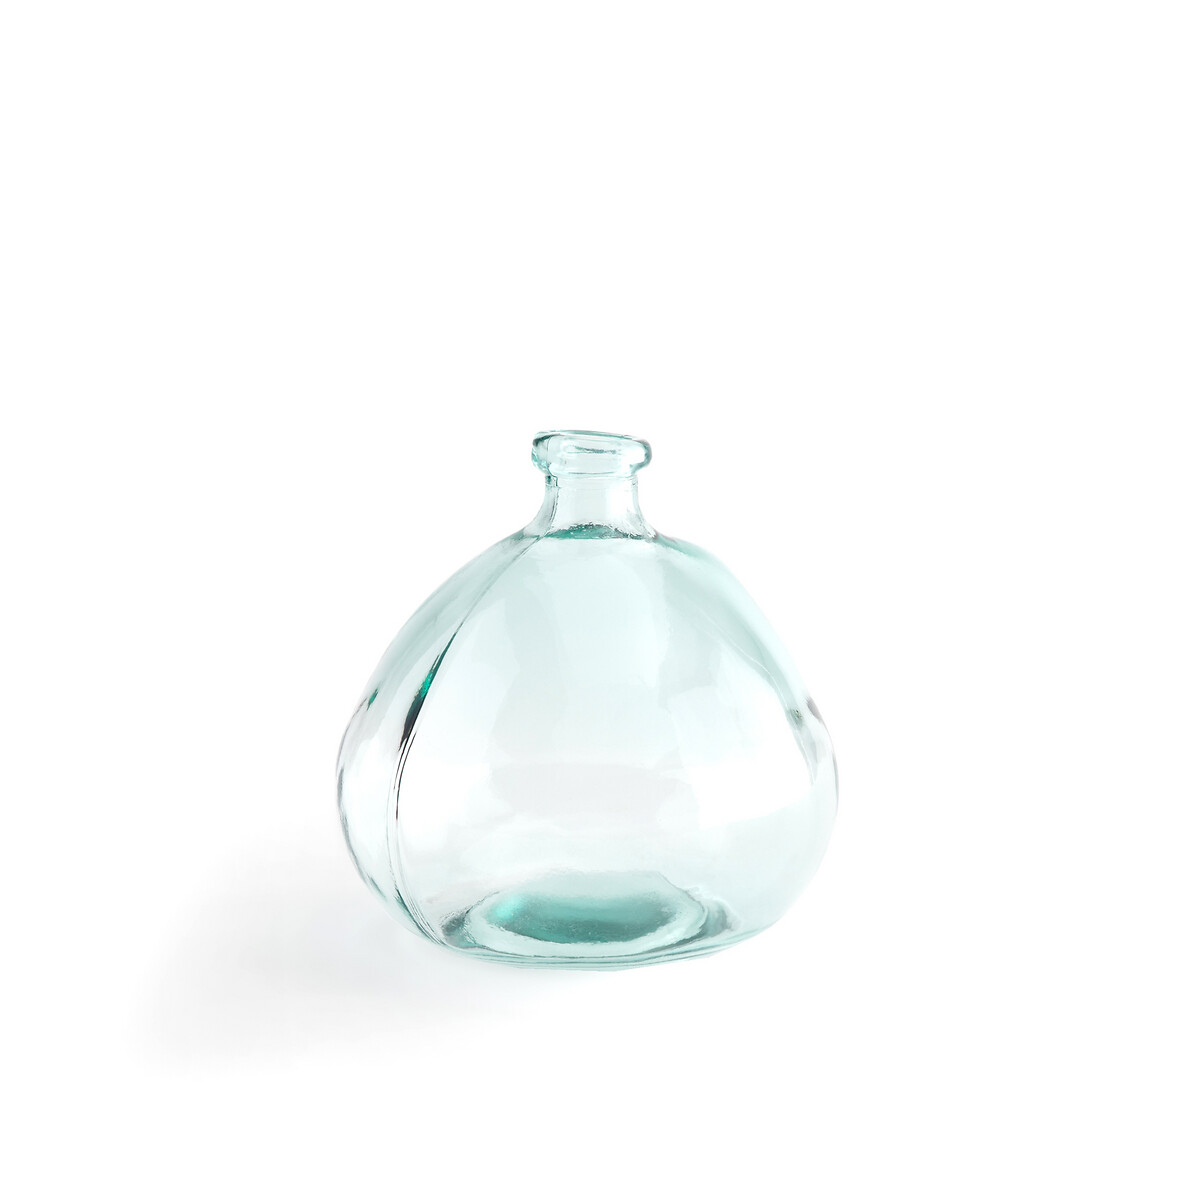 Izolia 23cm High Demijohn Glass Vase